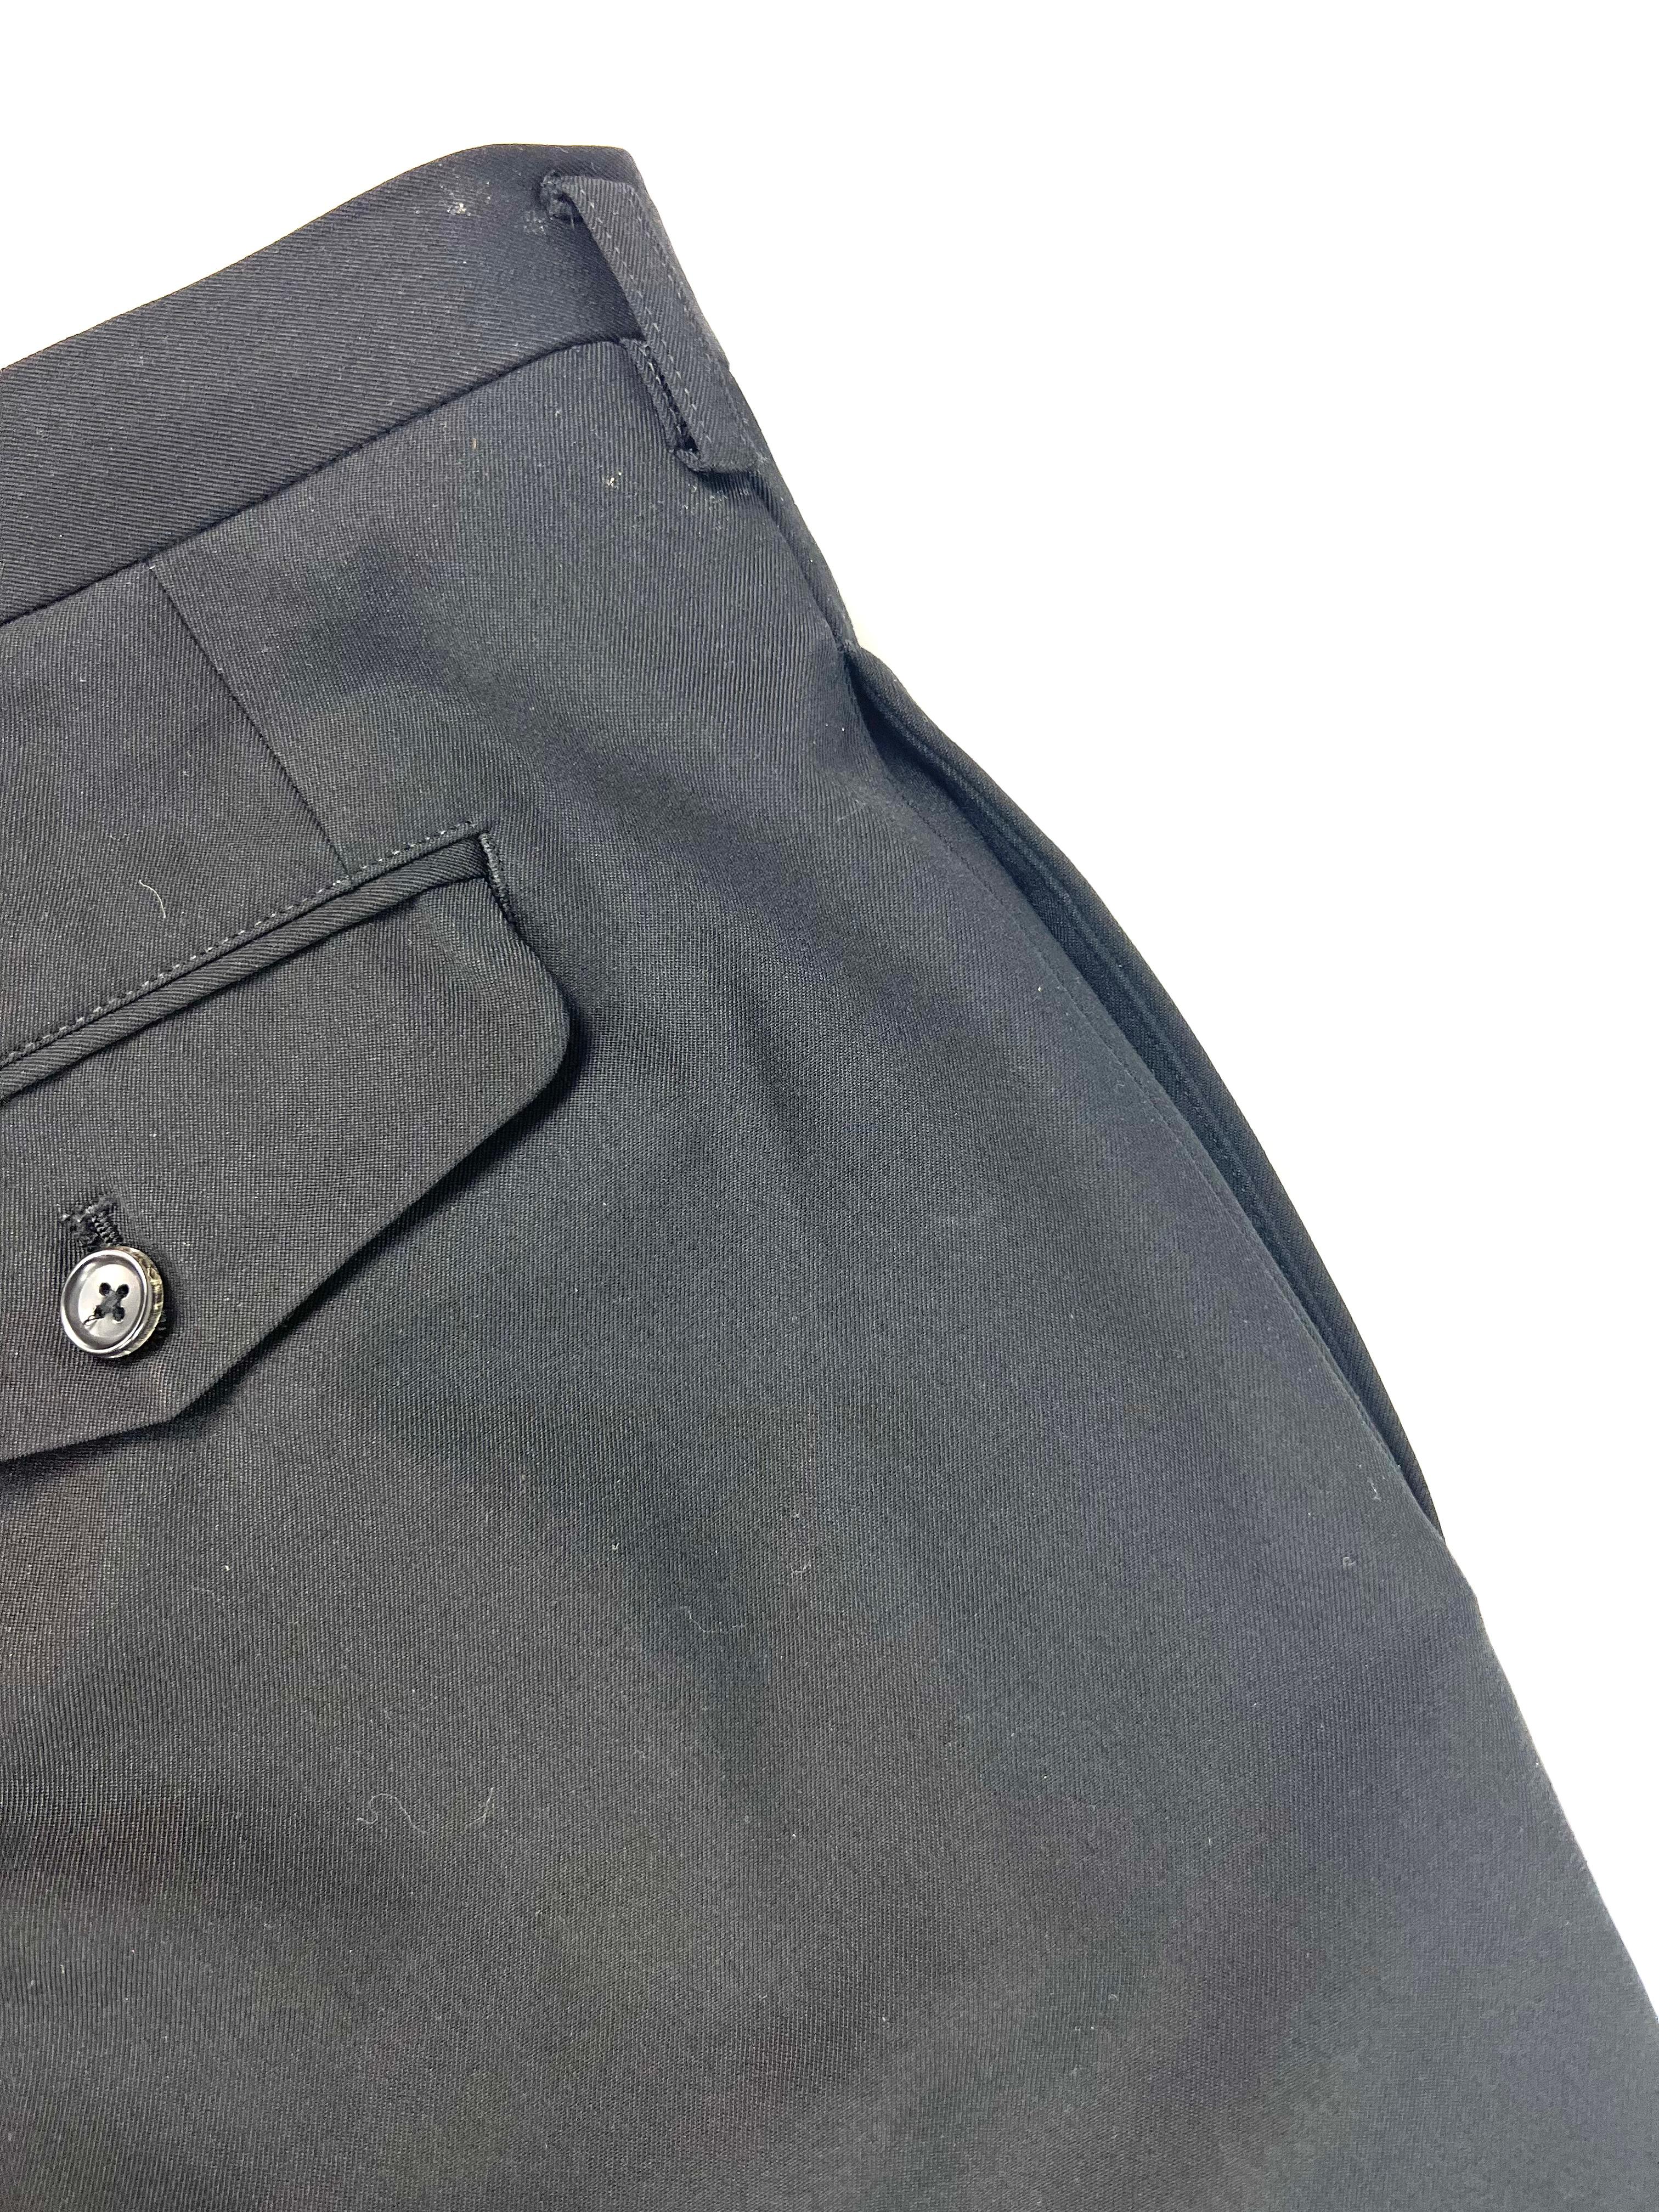 Vintage Black Wool Trousers Pants For Sale 1